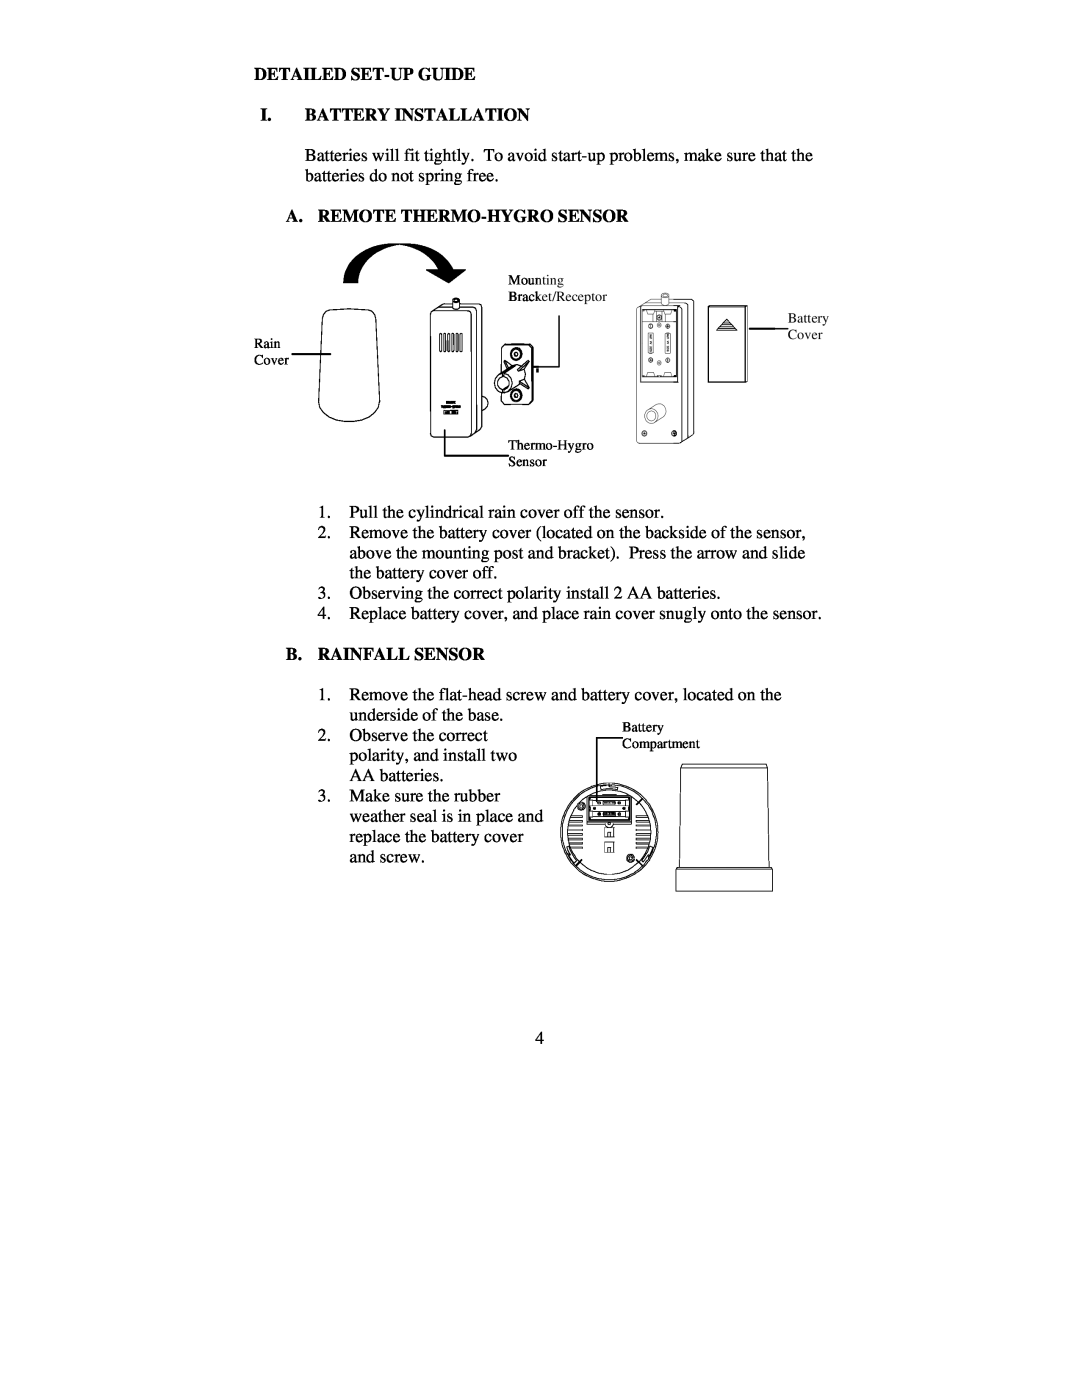 La Crosse Technology TX4U Detailed Set-Up Guide I. Battery Installation, A. Remote Thermo-Hygro Sensor, B. Rainfall Sensor 